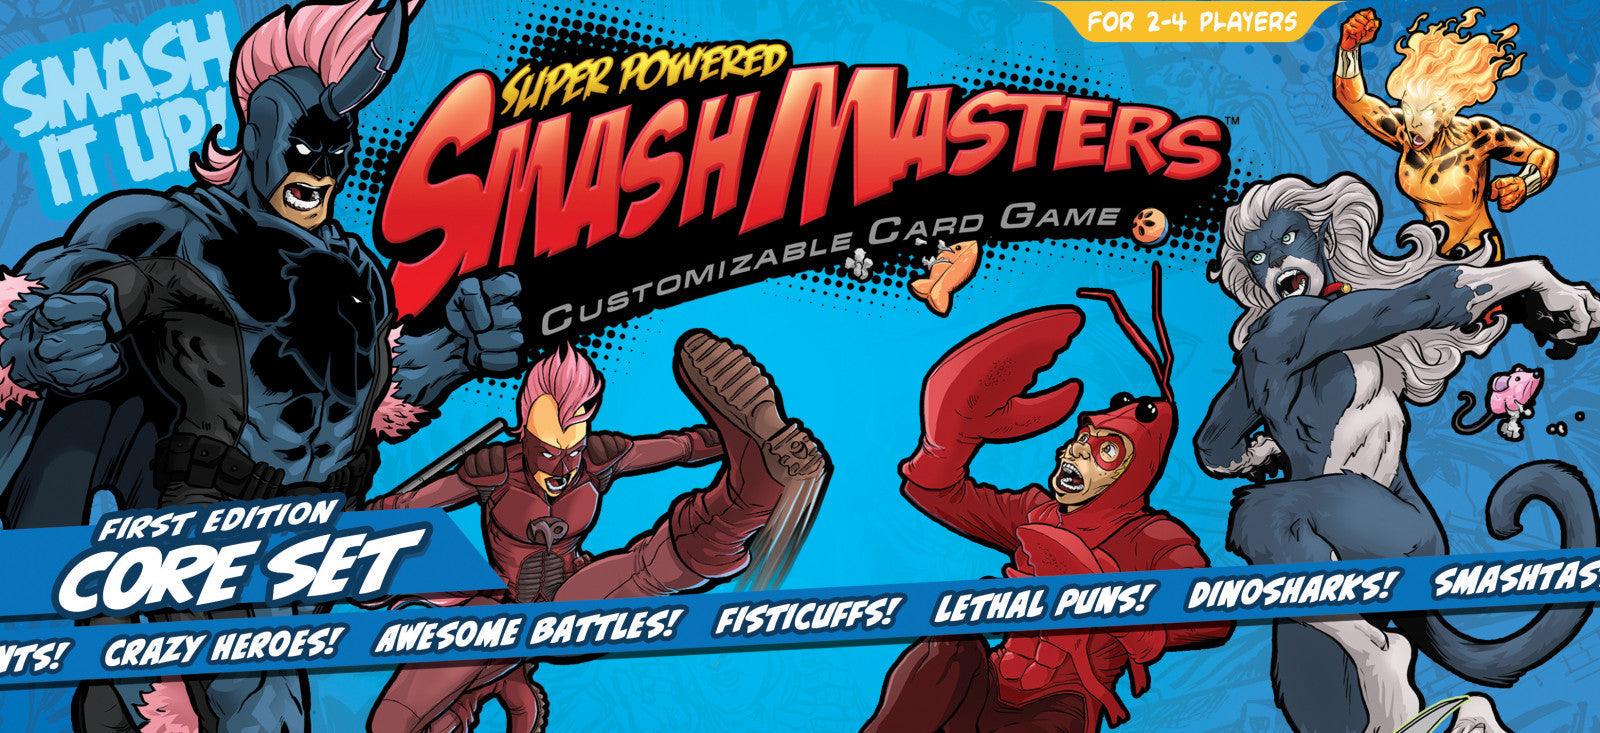 VR-97134 Super Powered Smash Masters Customizable Card Game Core Set - Dark Unicorn Games - Titan Pop Culture